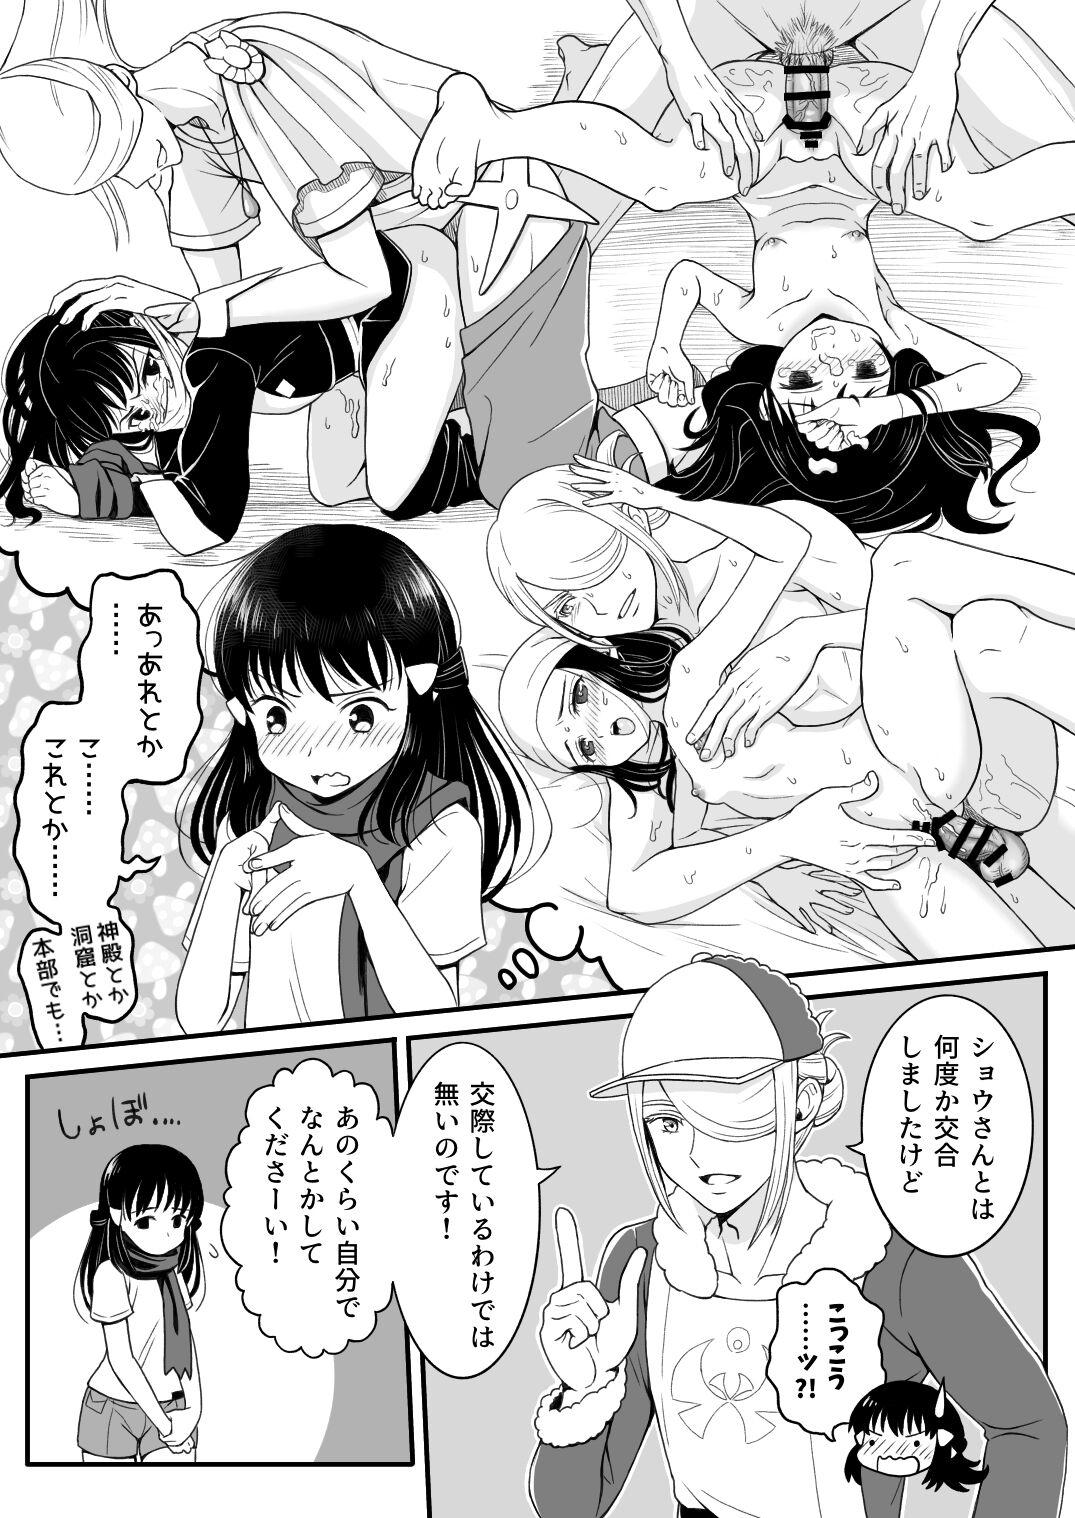 Volo x Shou R-18 Manga 6